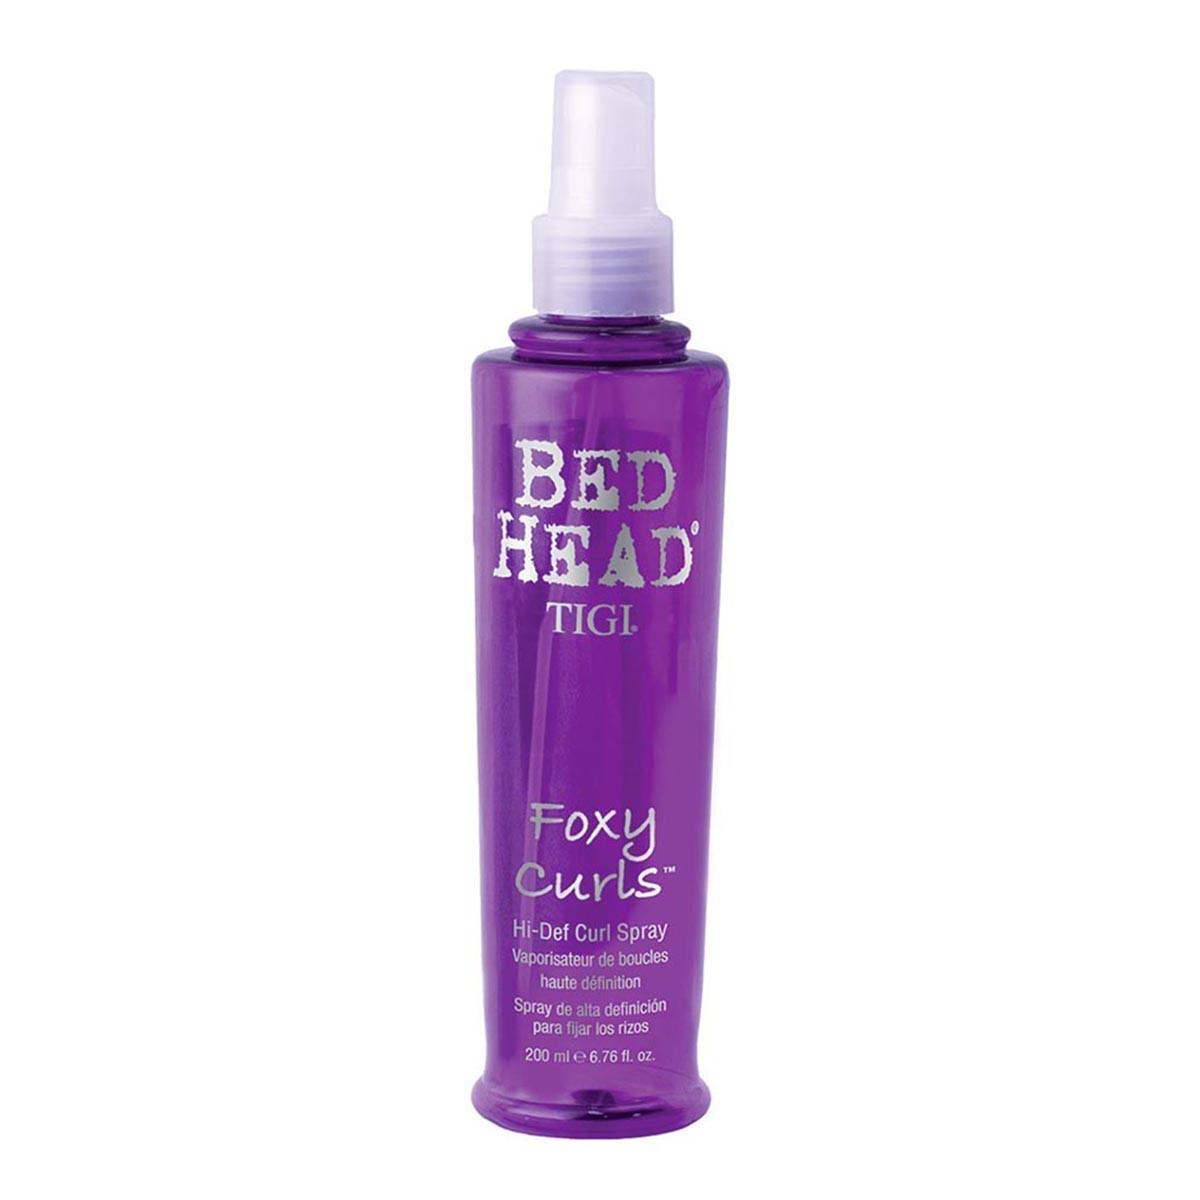 tigi-bed-head-foxy-curls-hidef-curl-spray-200ml